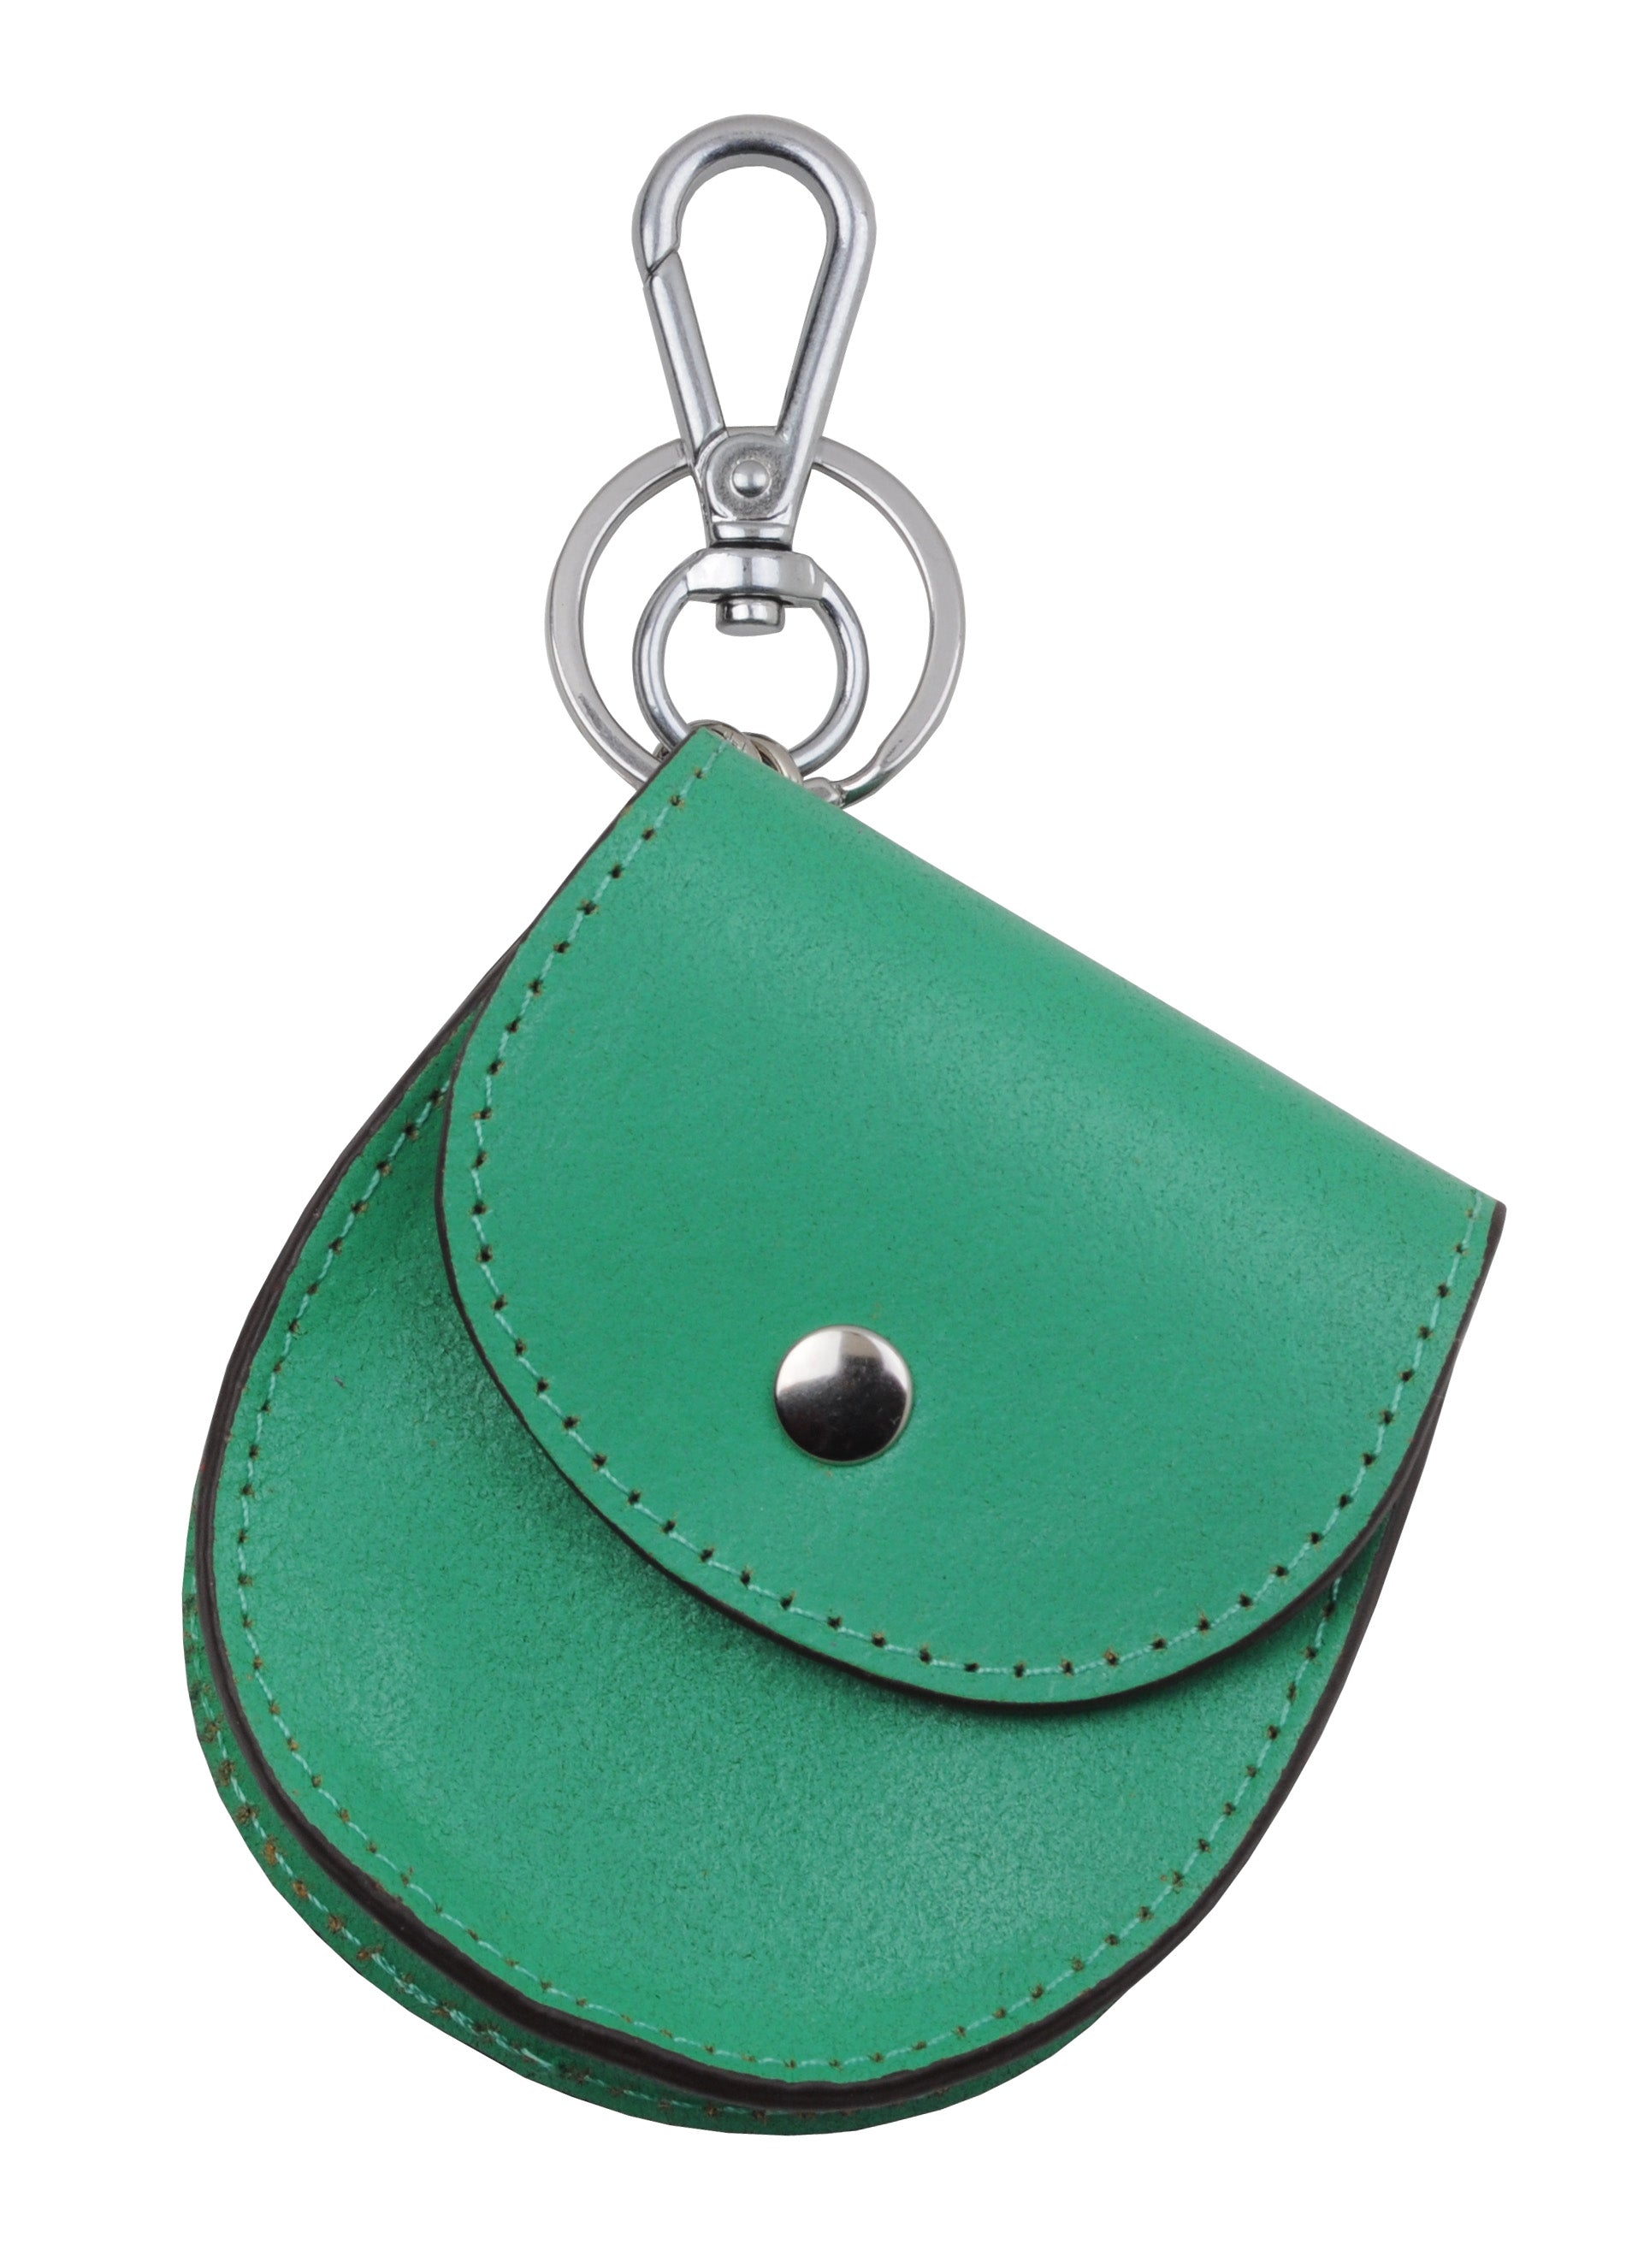 Louis Vuitton Nebula Mini Keepall Pouch Key Holder and Bag Charm Metallic